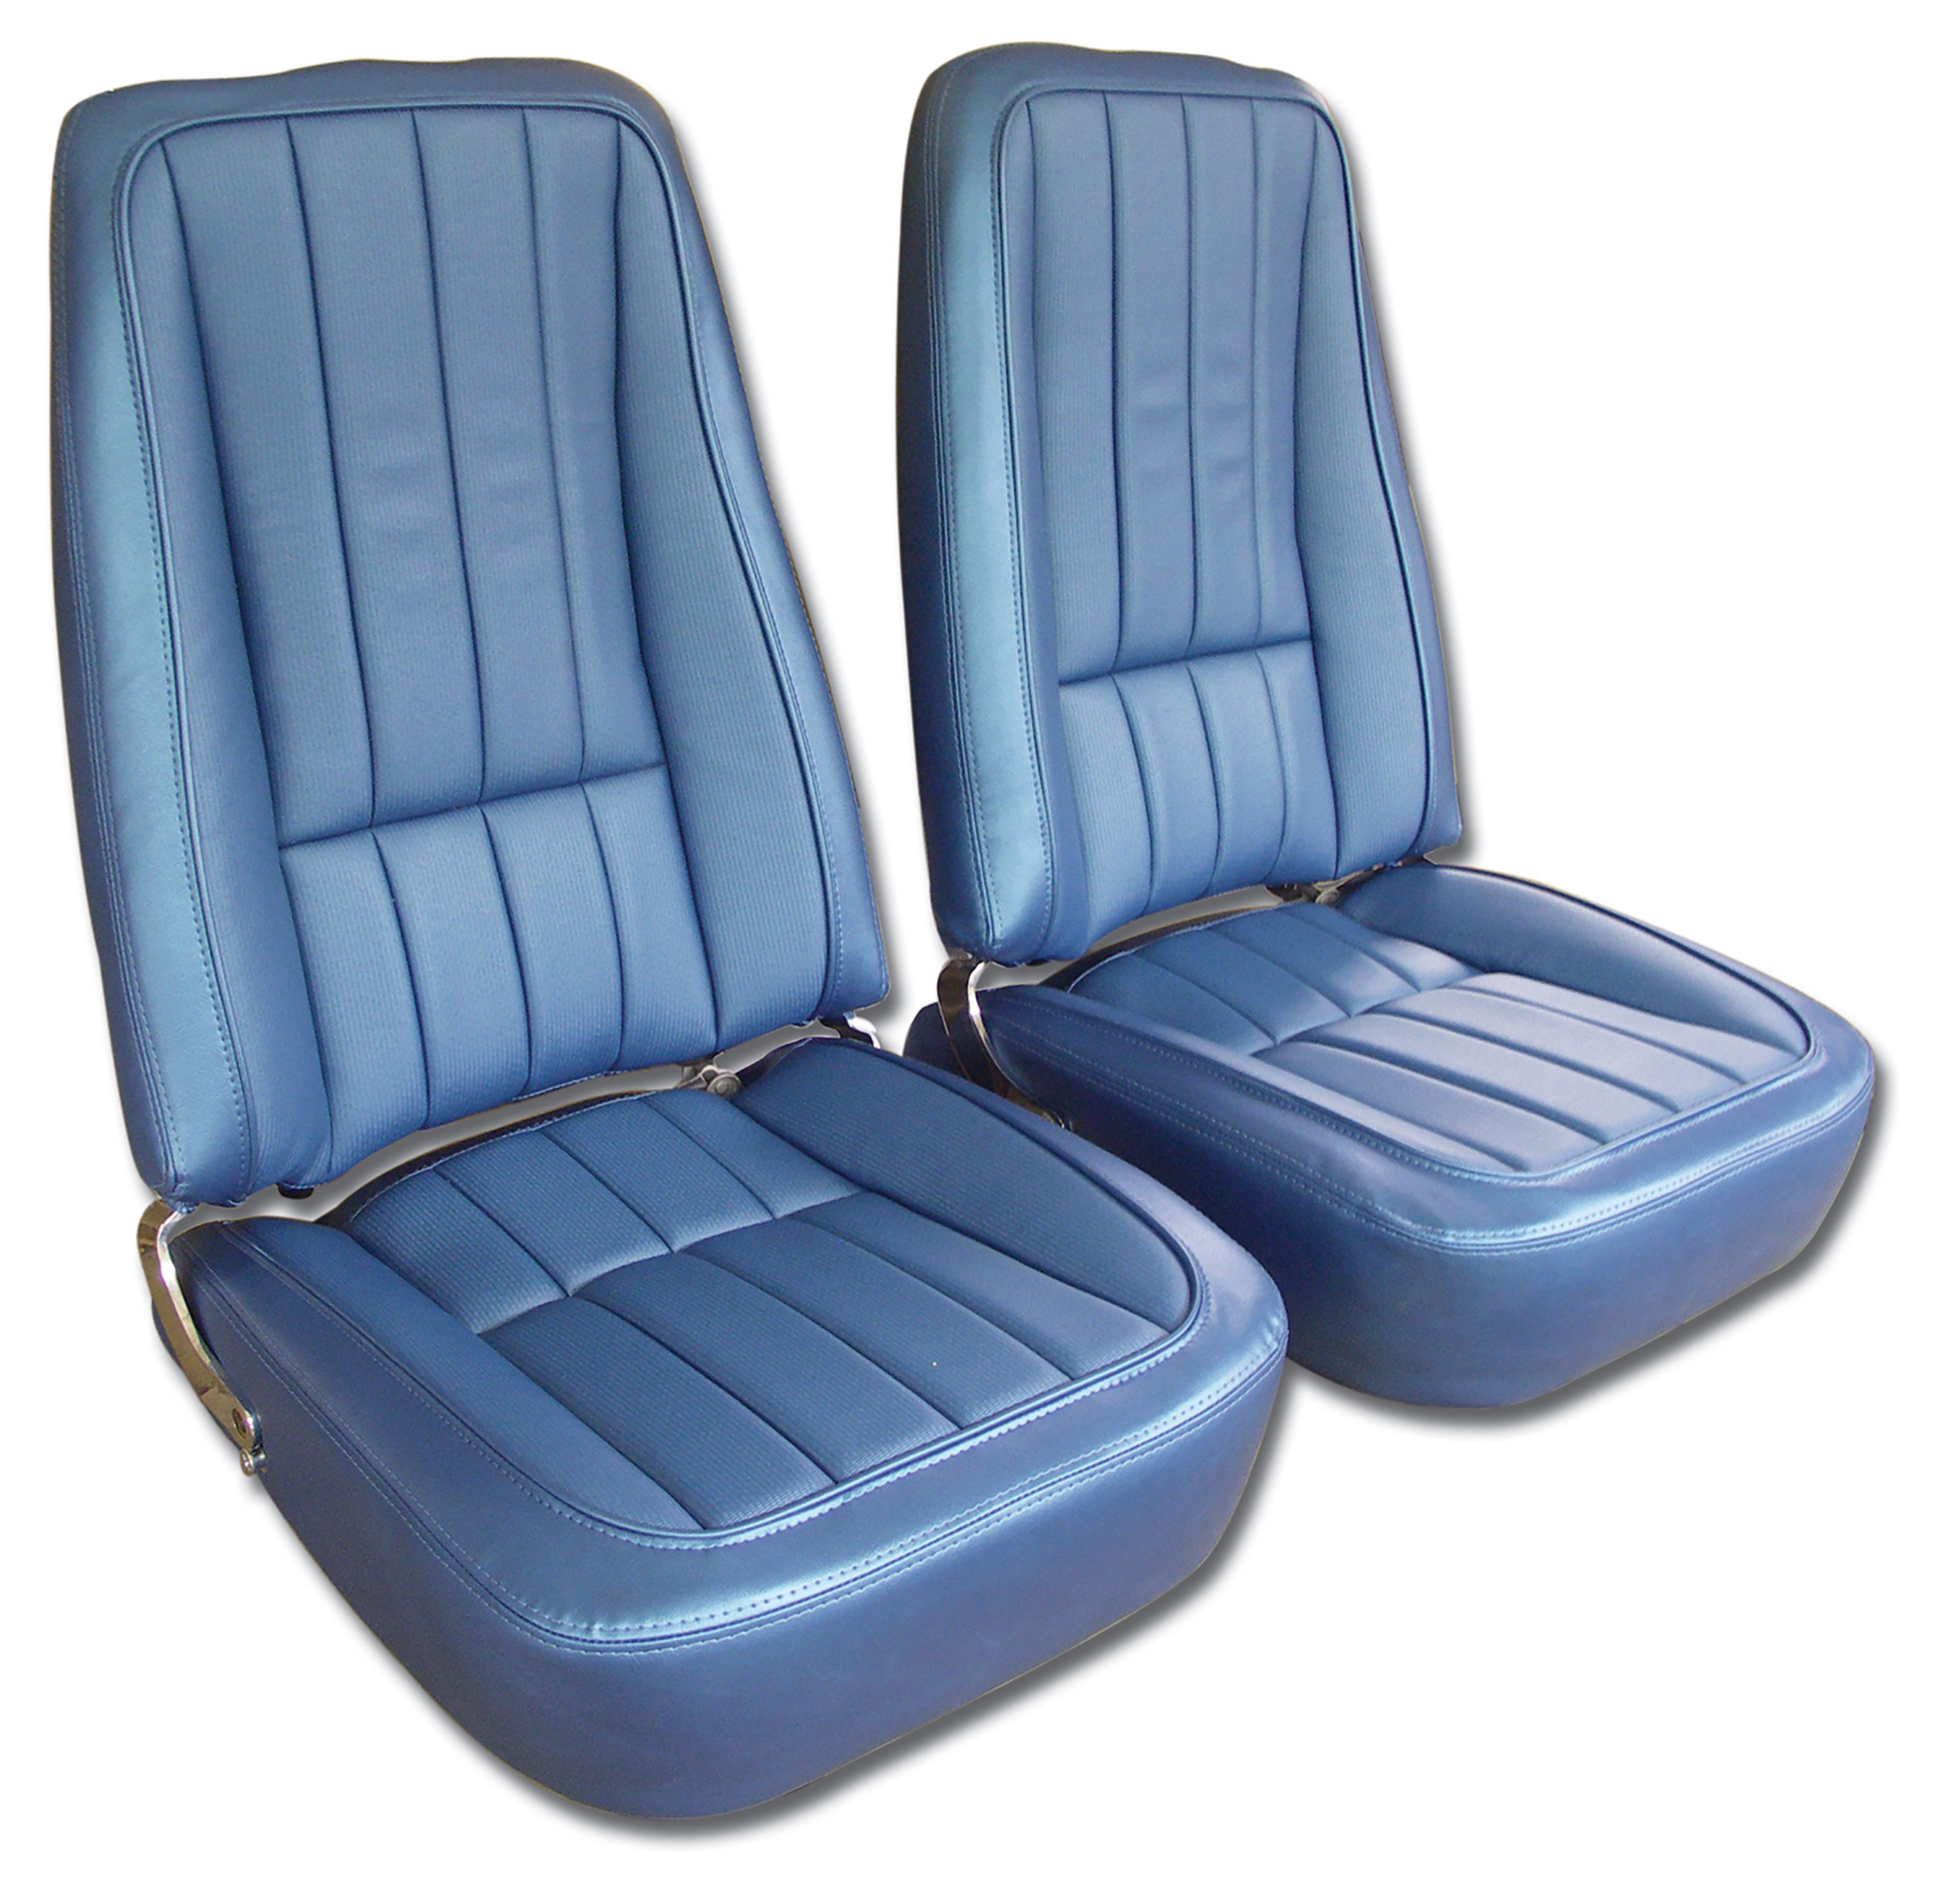 1969 C3 Corvette Mounted Seats Bright Blue "Leather-Like" Vinyl Without Headrest Bracket